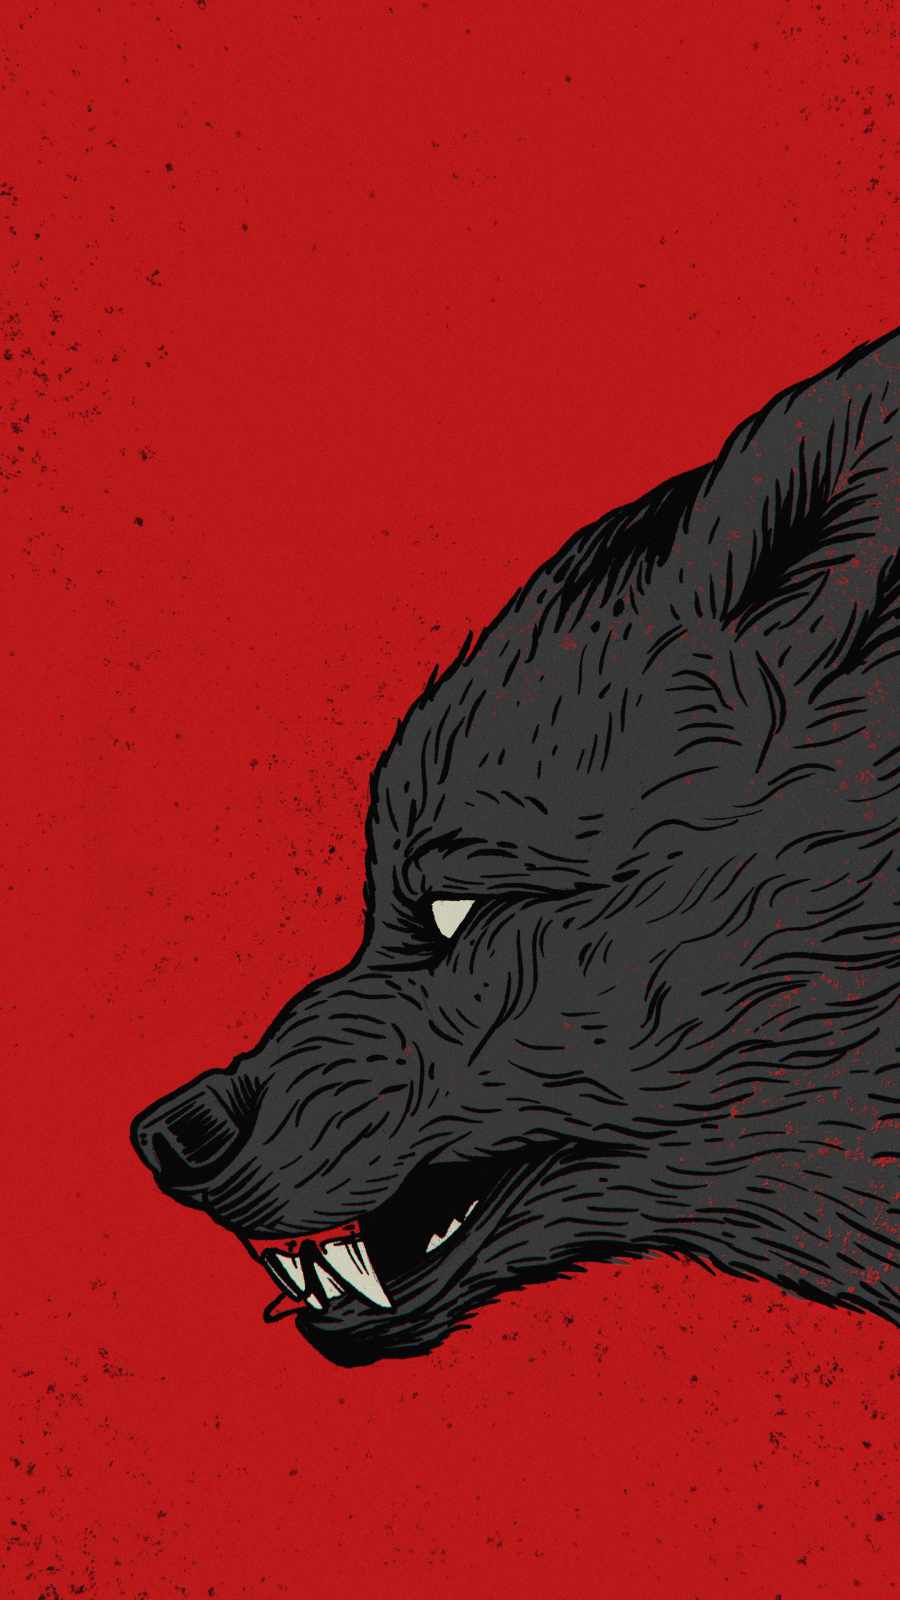 Black Wolf iPhone Wallpaper